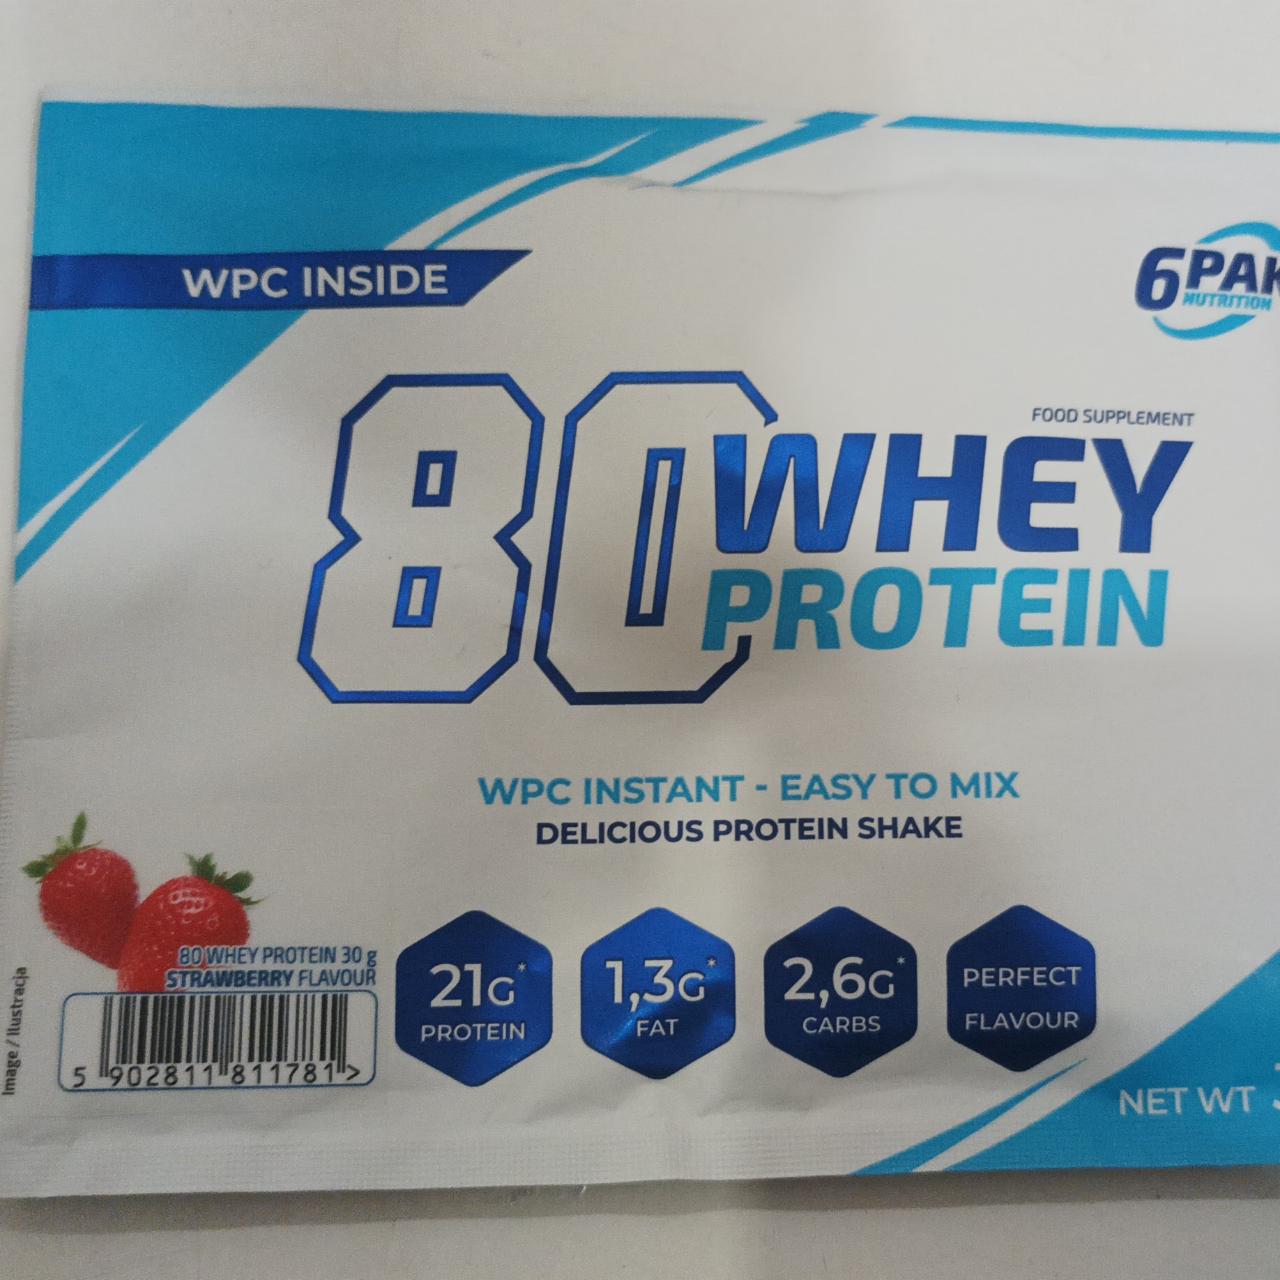 Fotografie - 80 Whey protein Strawberry flavour 6PAK Nutrition